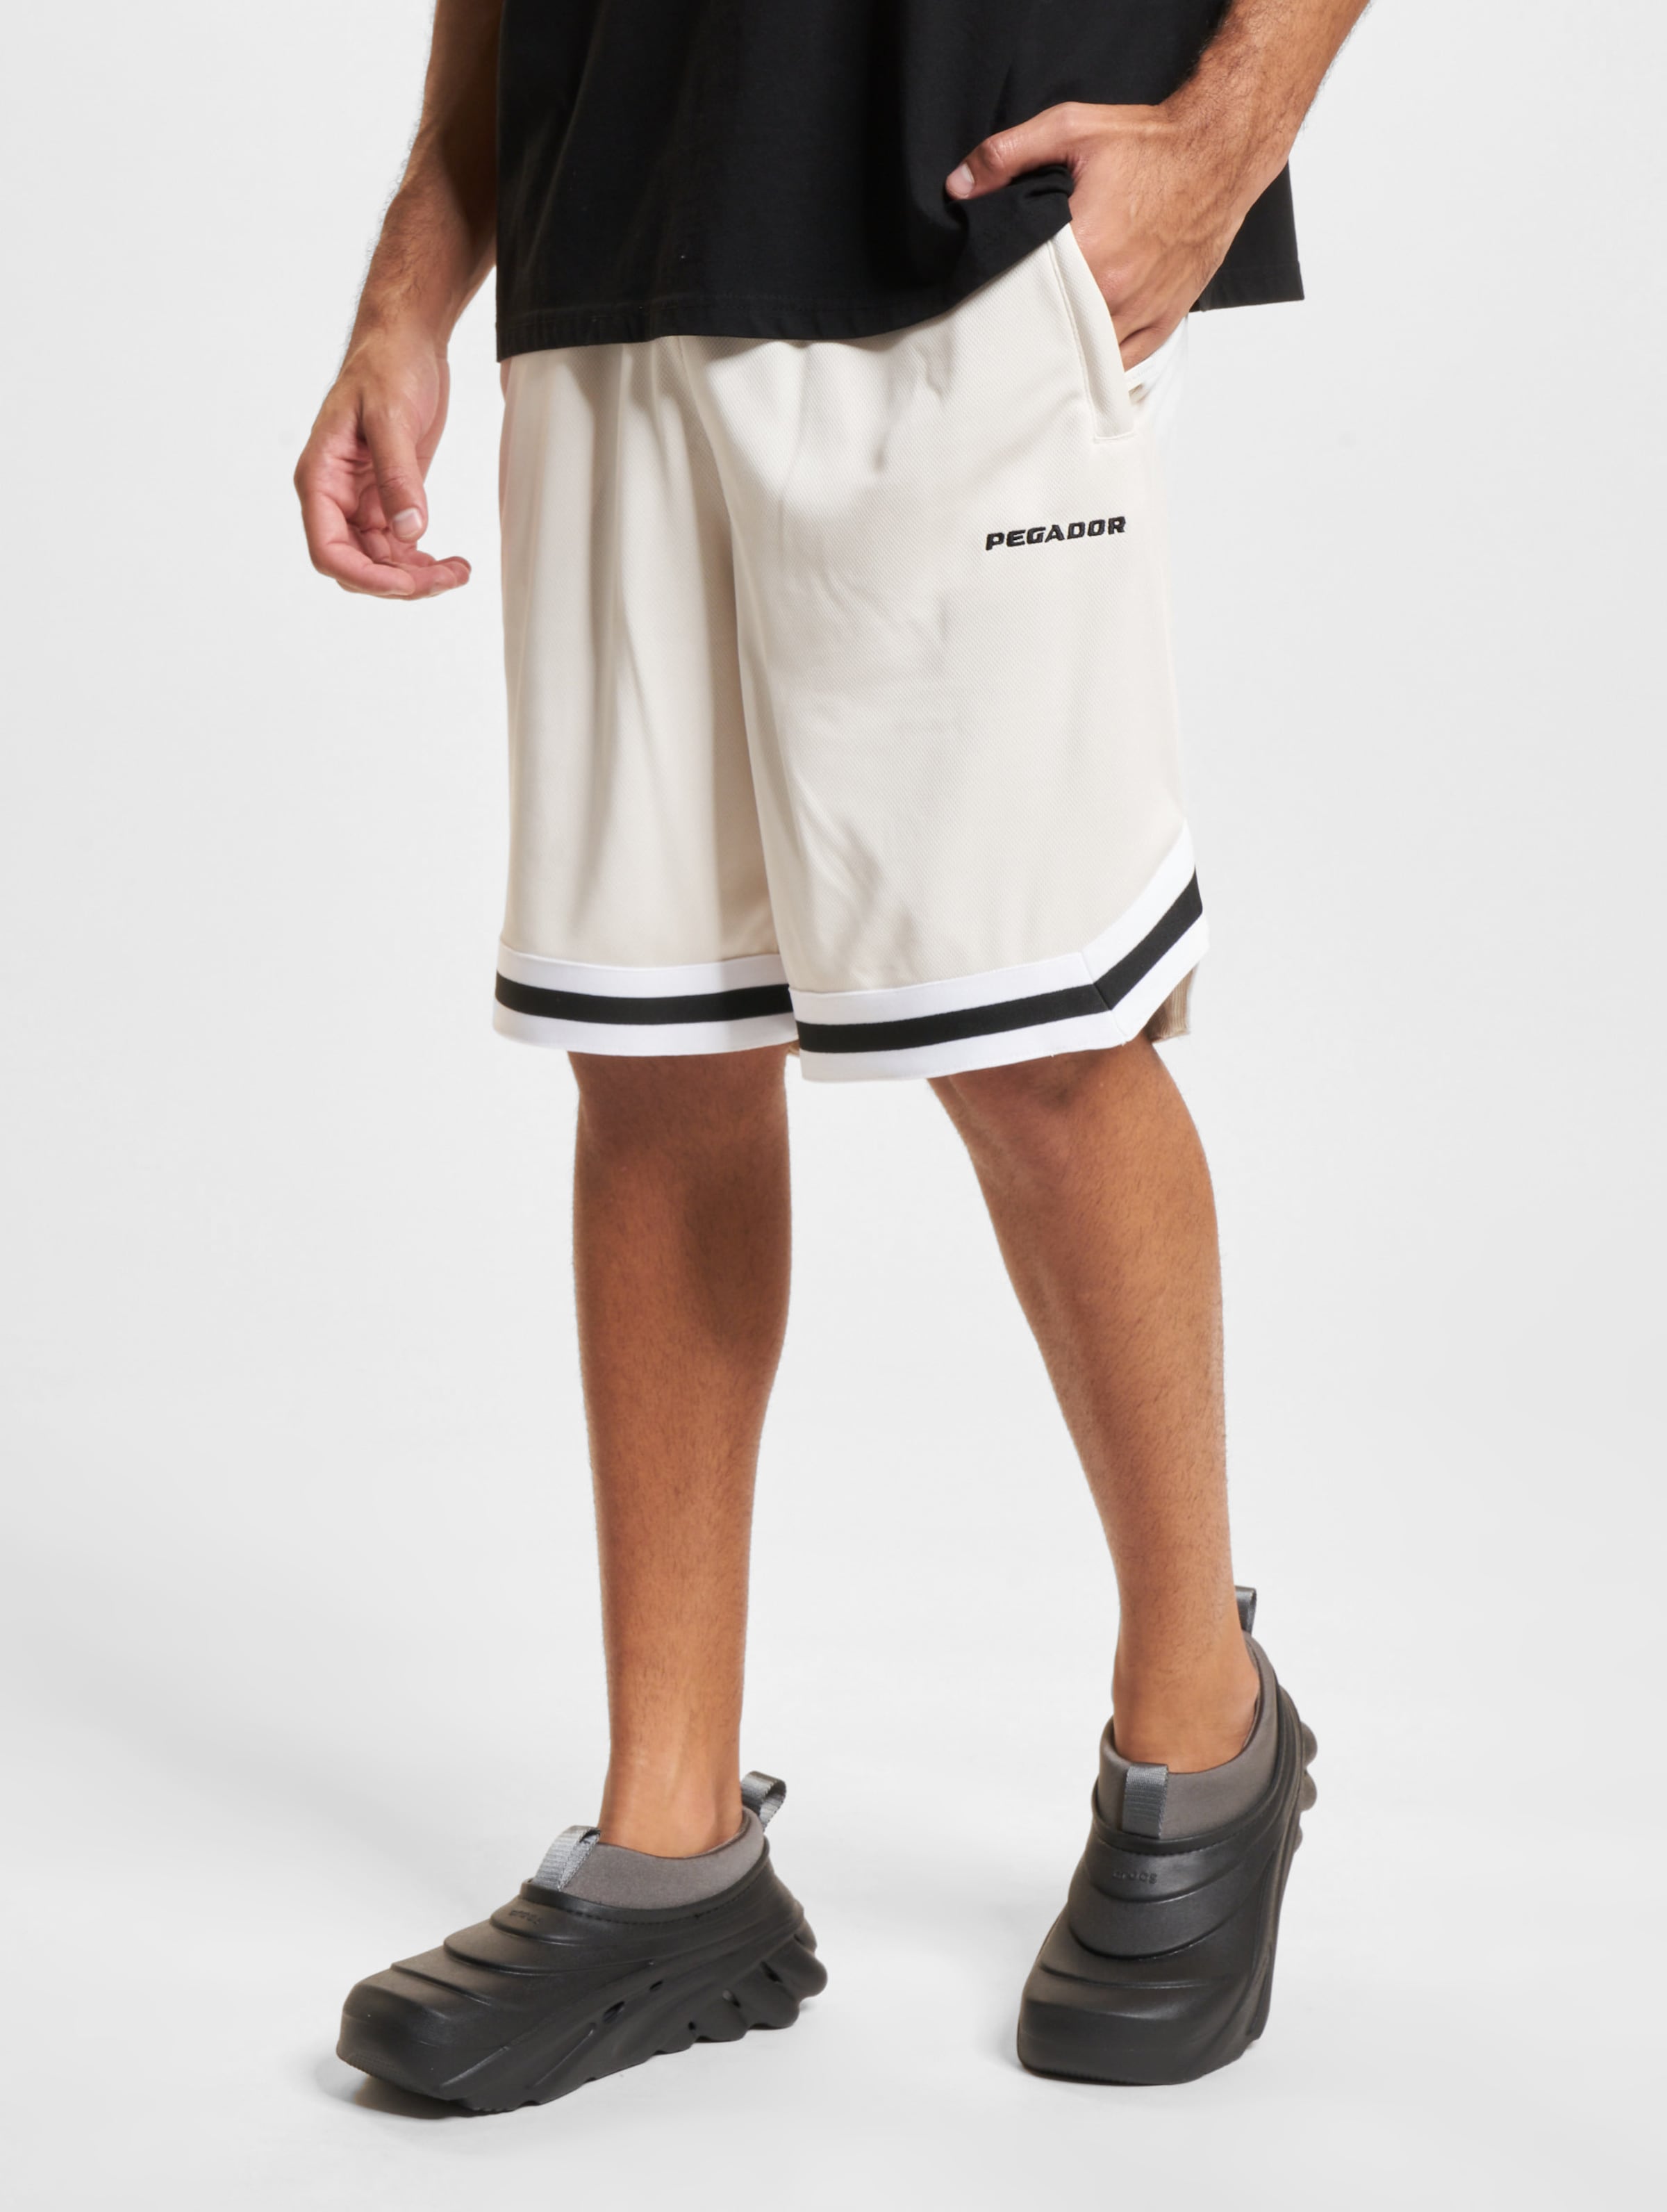 PEGADOR Lansing Basketball Shorts Männer,Unisex op kleur wit, Maat M